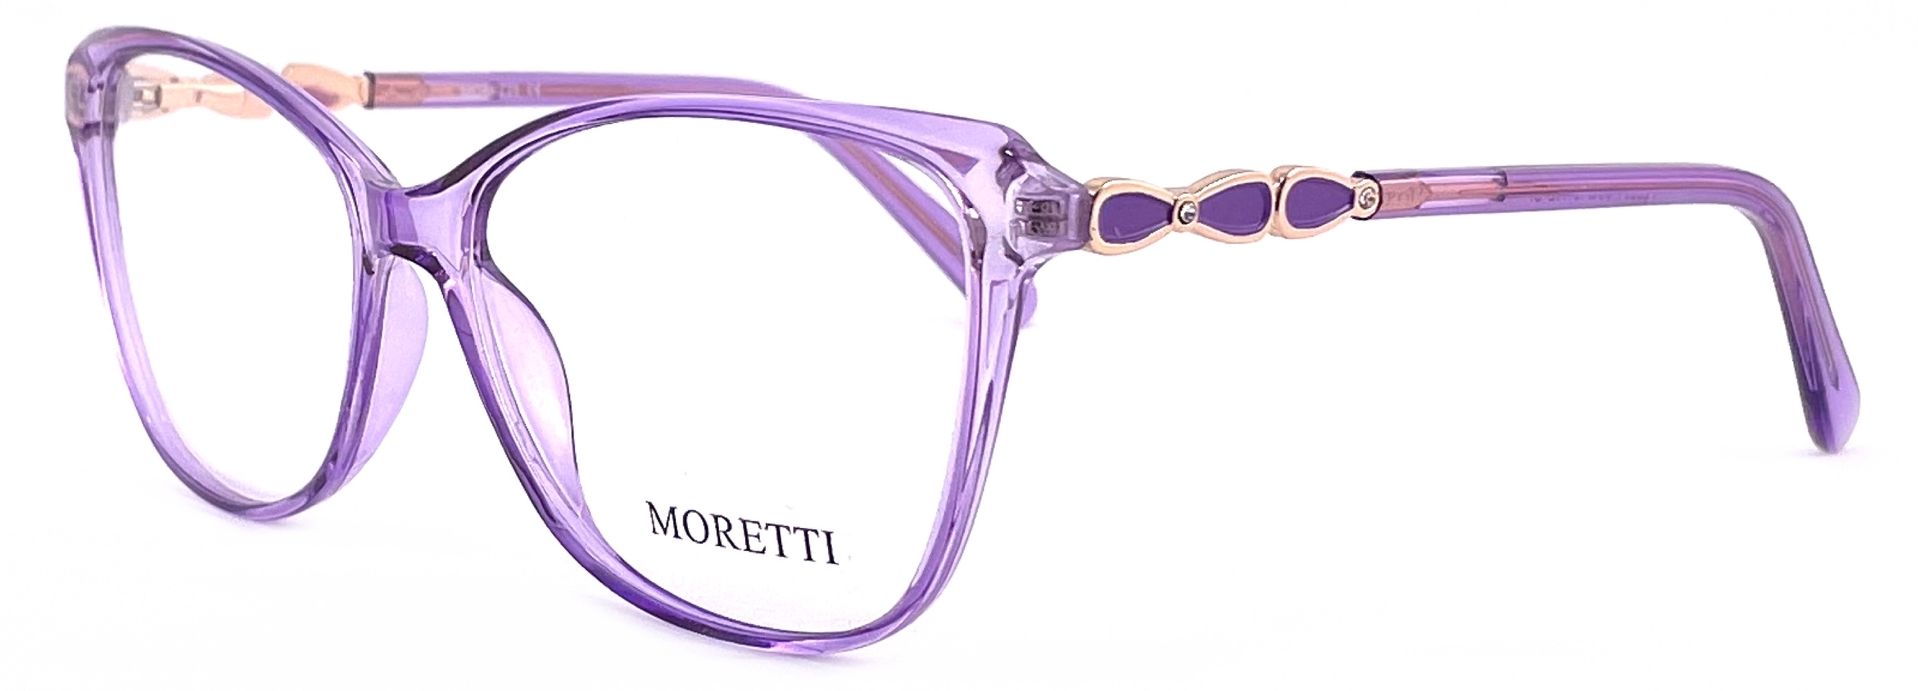 Moretti FL3201 C7 2